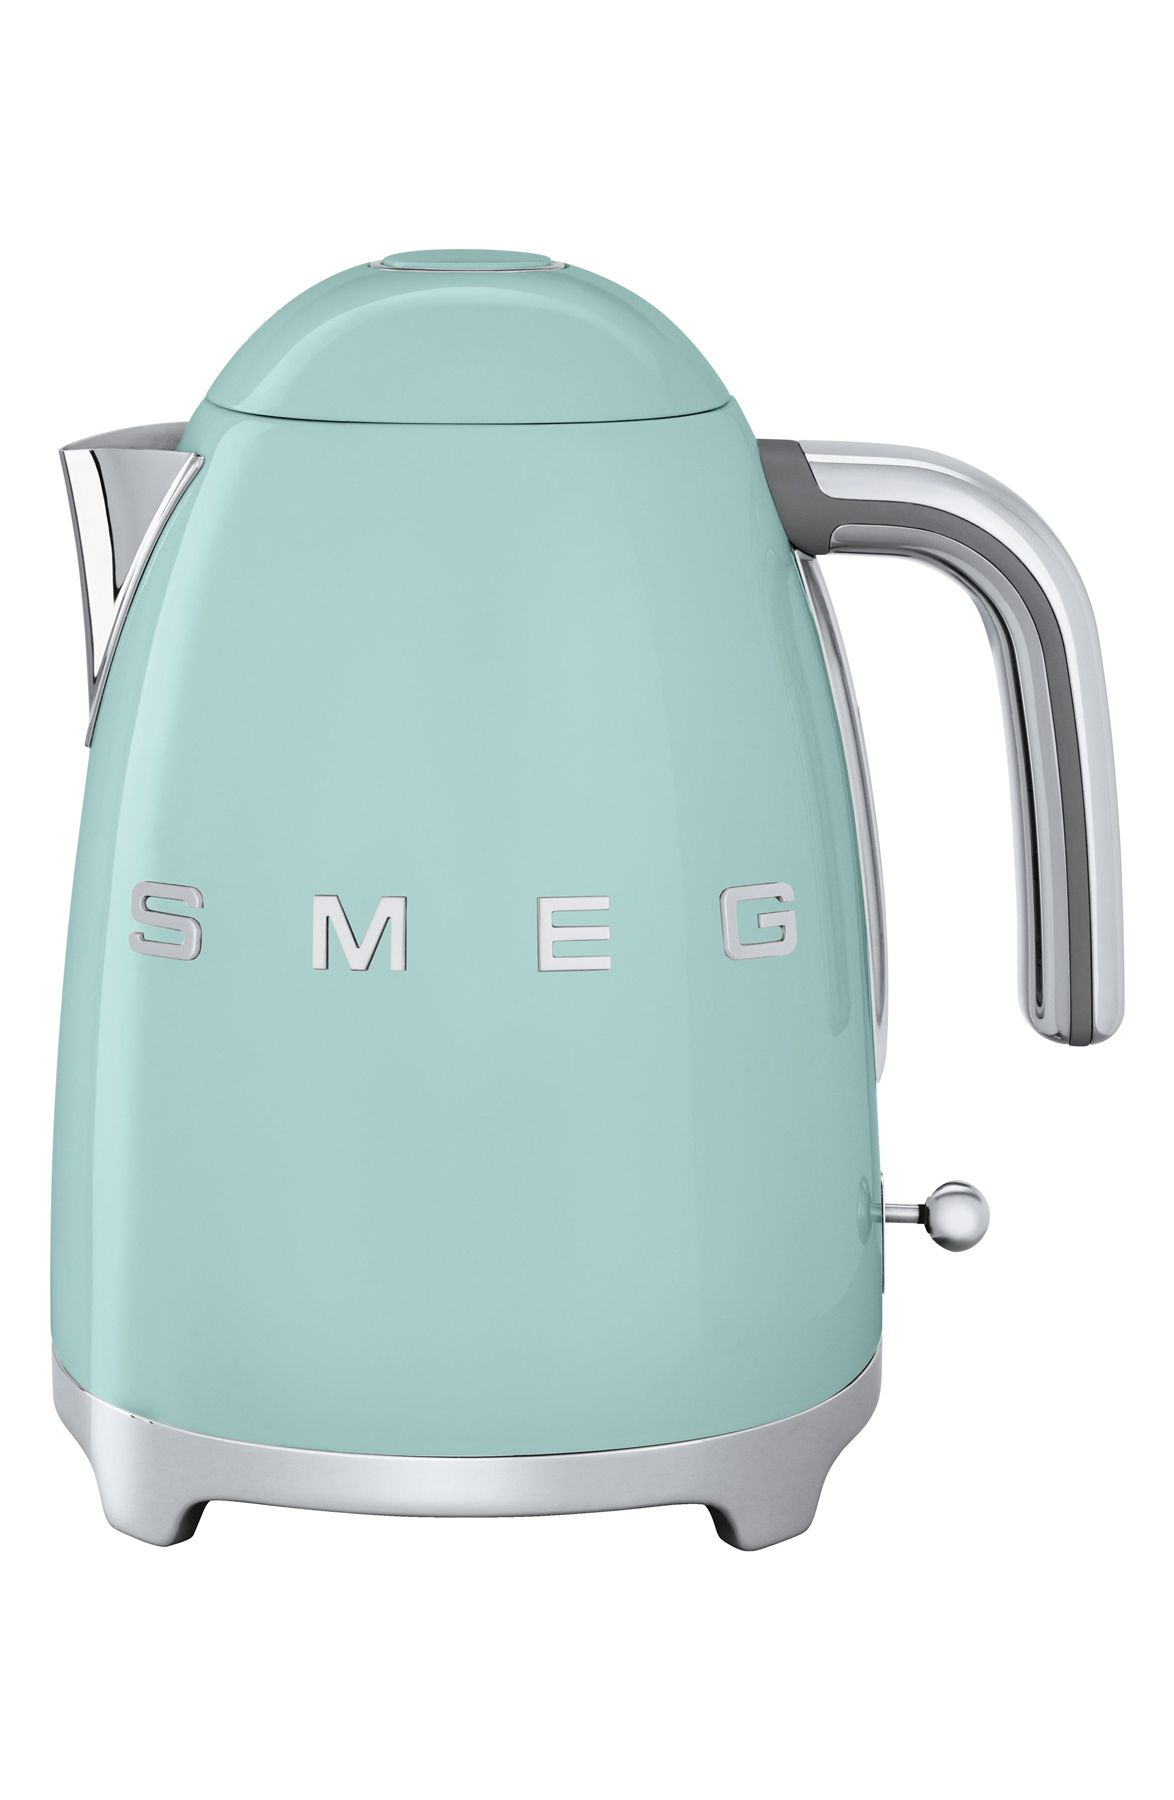 Best housewarming gifts - Smeg water kettle